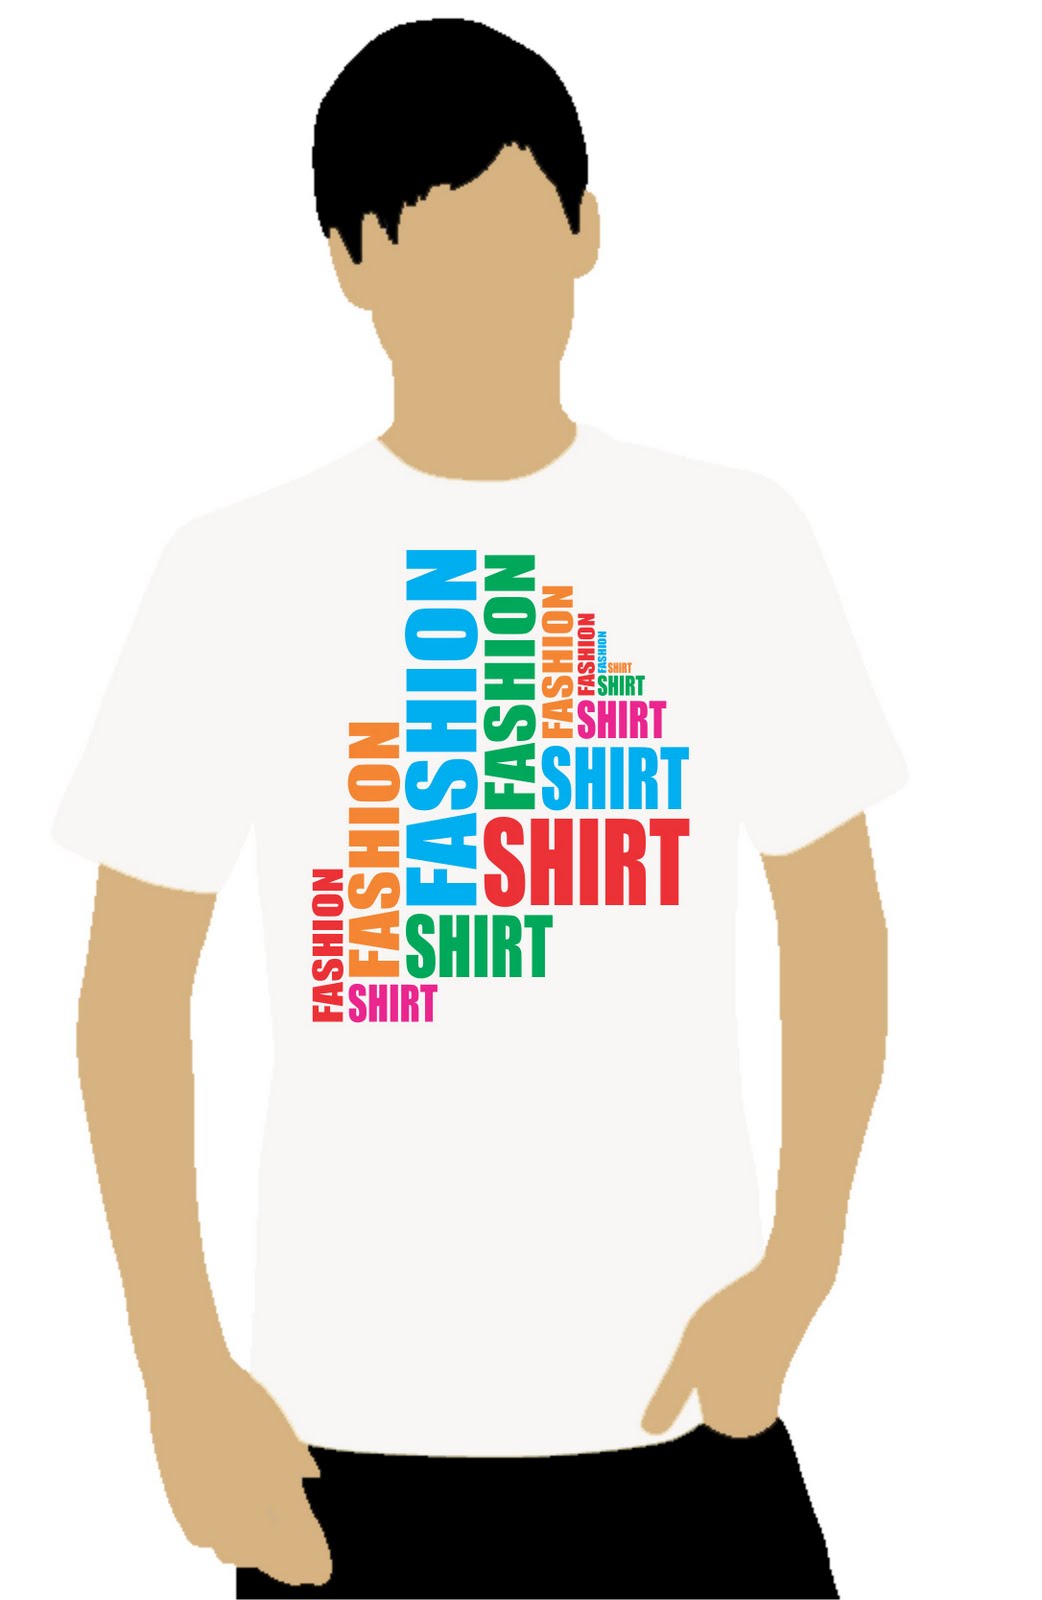 PRINTING HUB: T-shirt designs